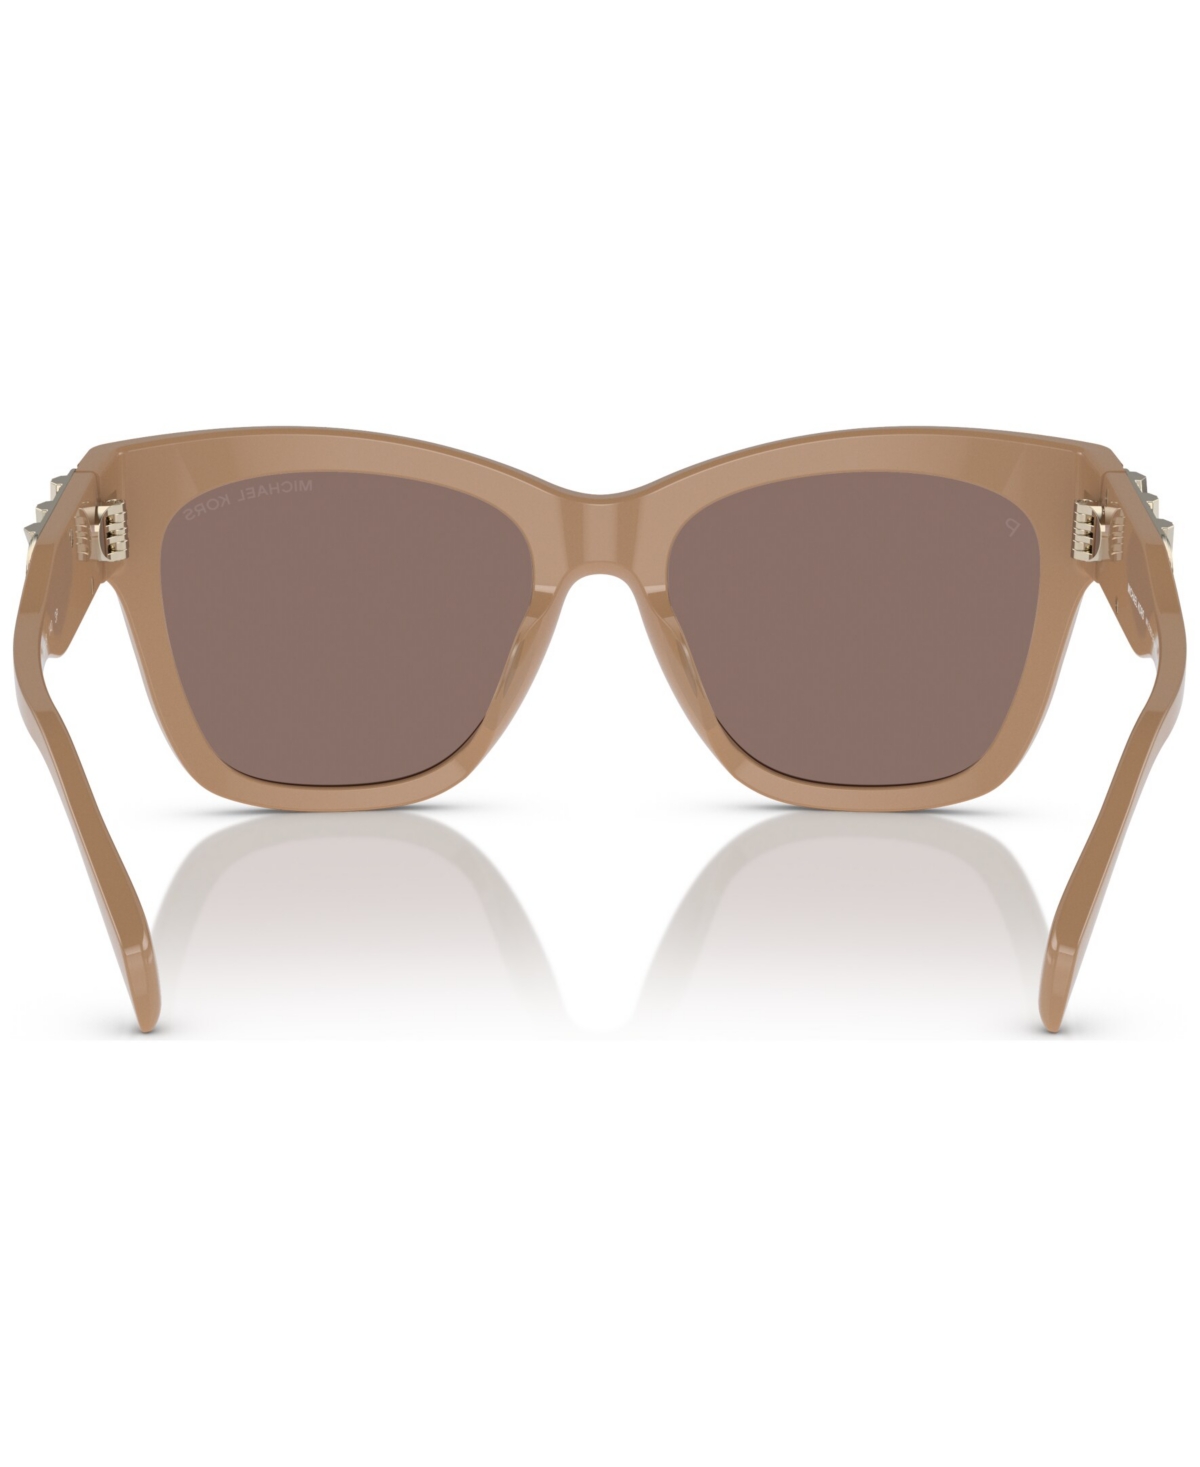 Shop Michael Kors Women's Polarized Sunglasses, Empire Square In Camel Solid